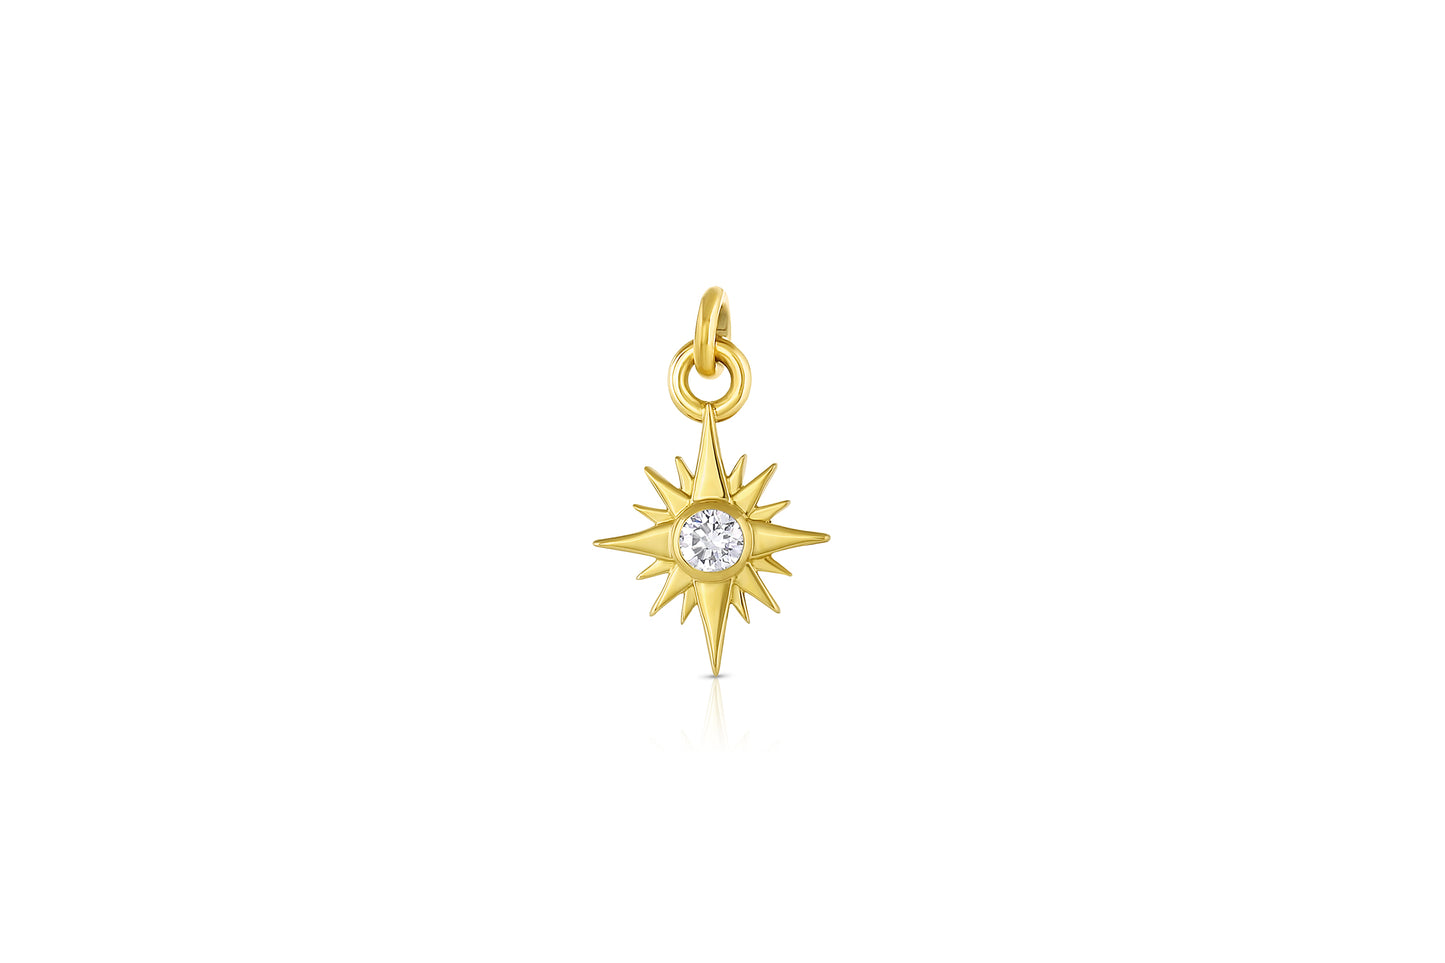 18k yellow gold star charm with diamond center stone on white background.